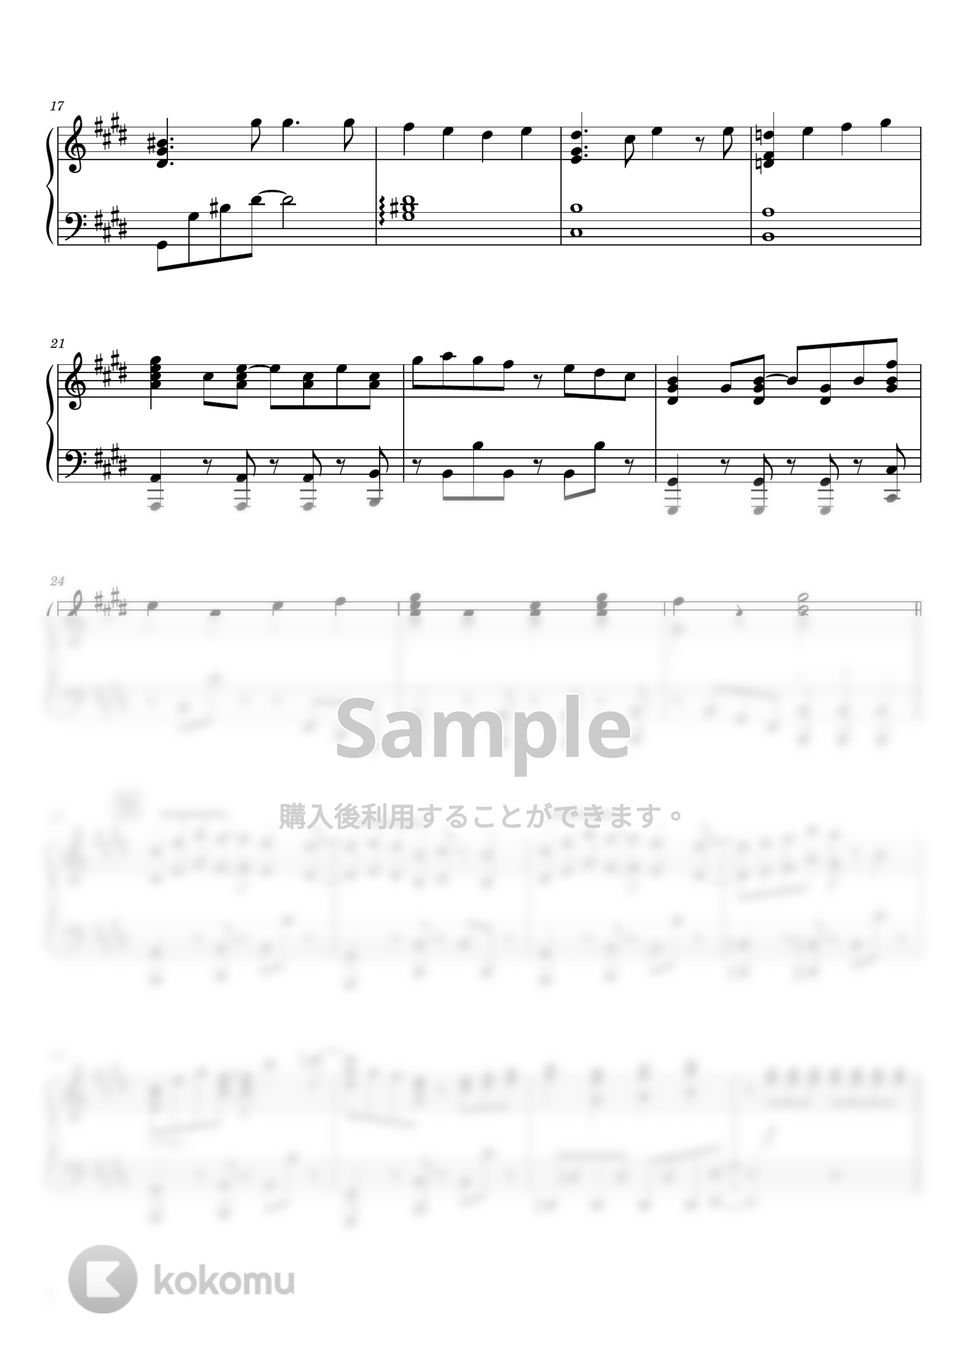 LiSA - 往け (ピアノソロ / 上級) by SuperMomoFactory